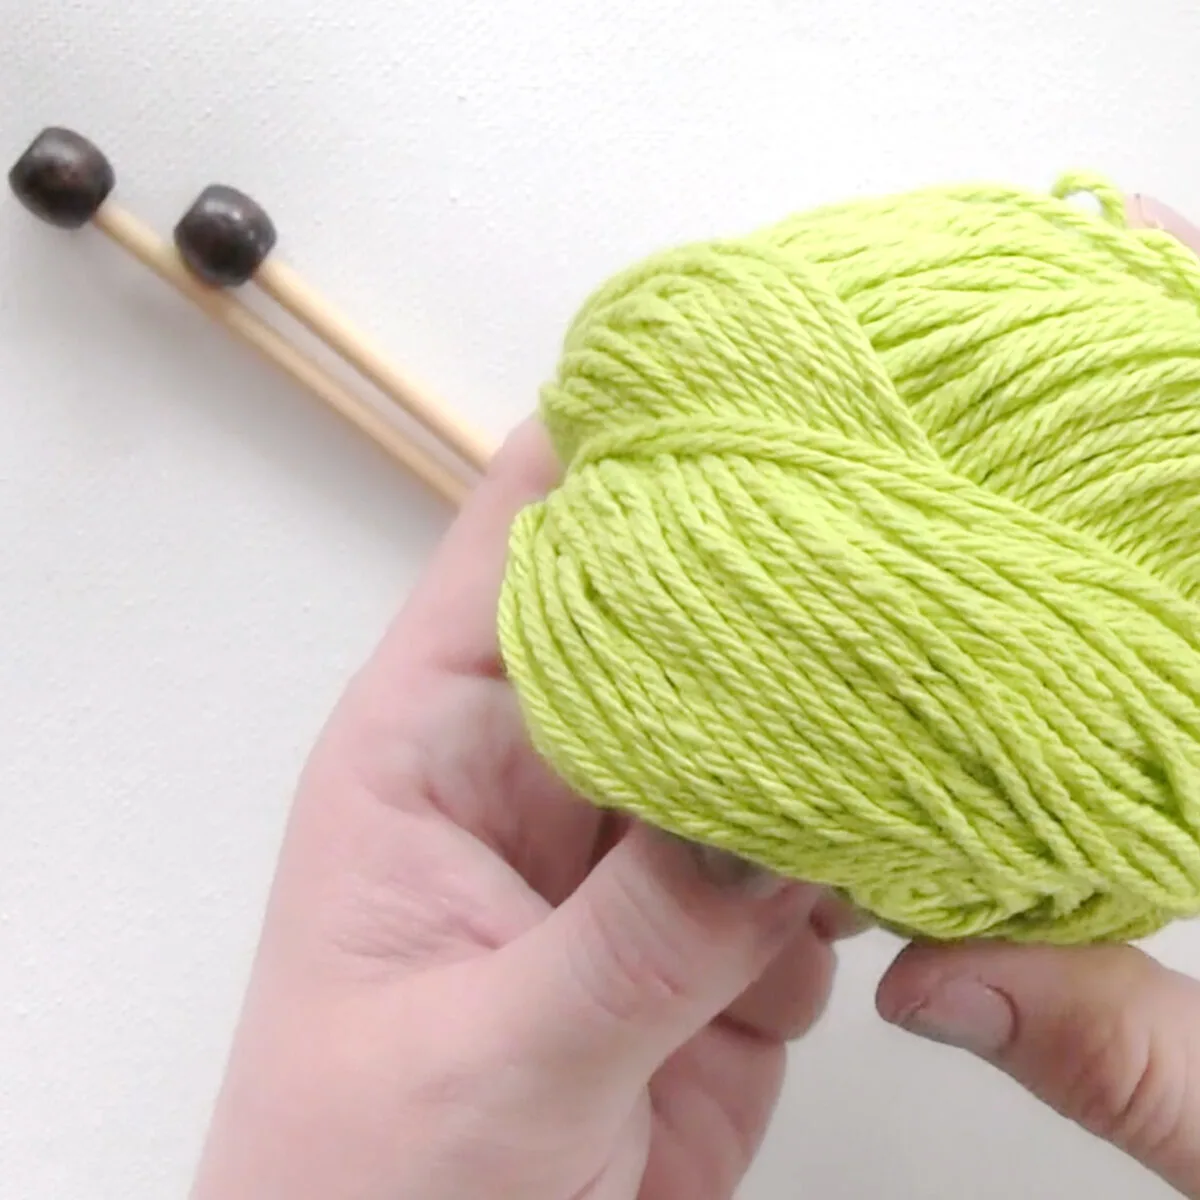 Green cotton yarn and knitting needles.